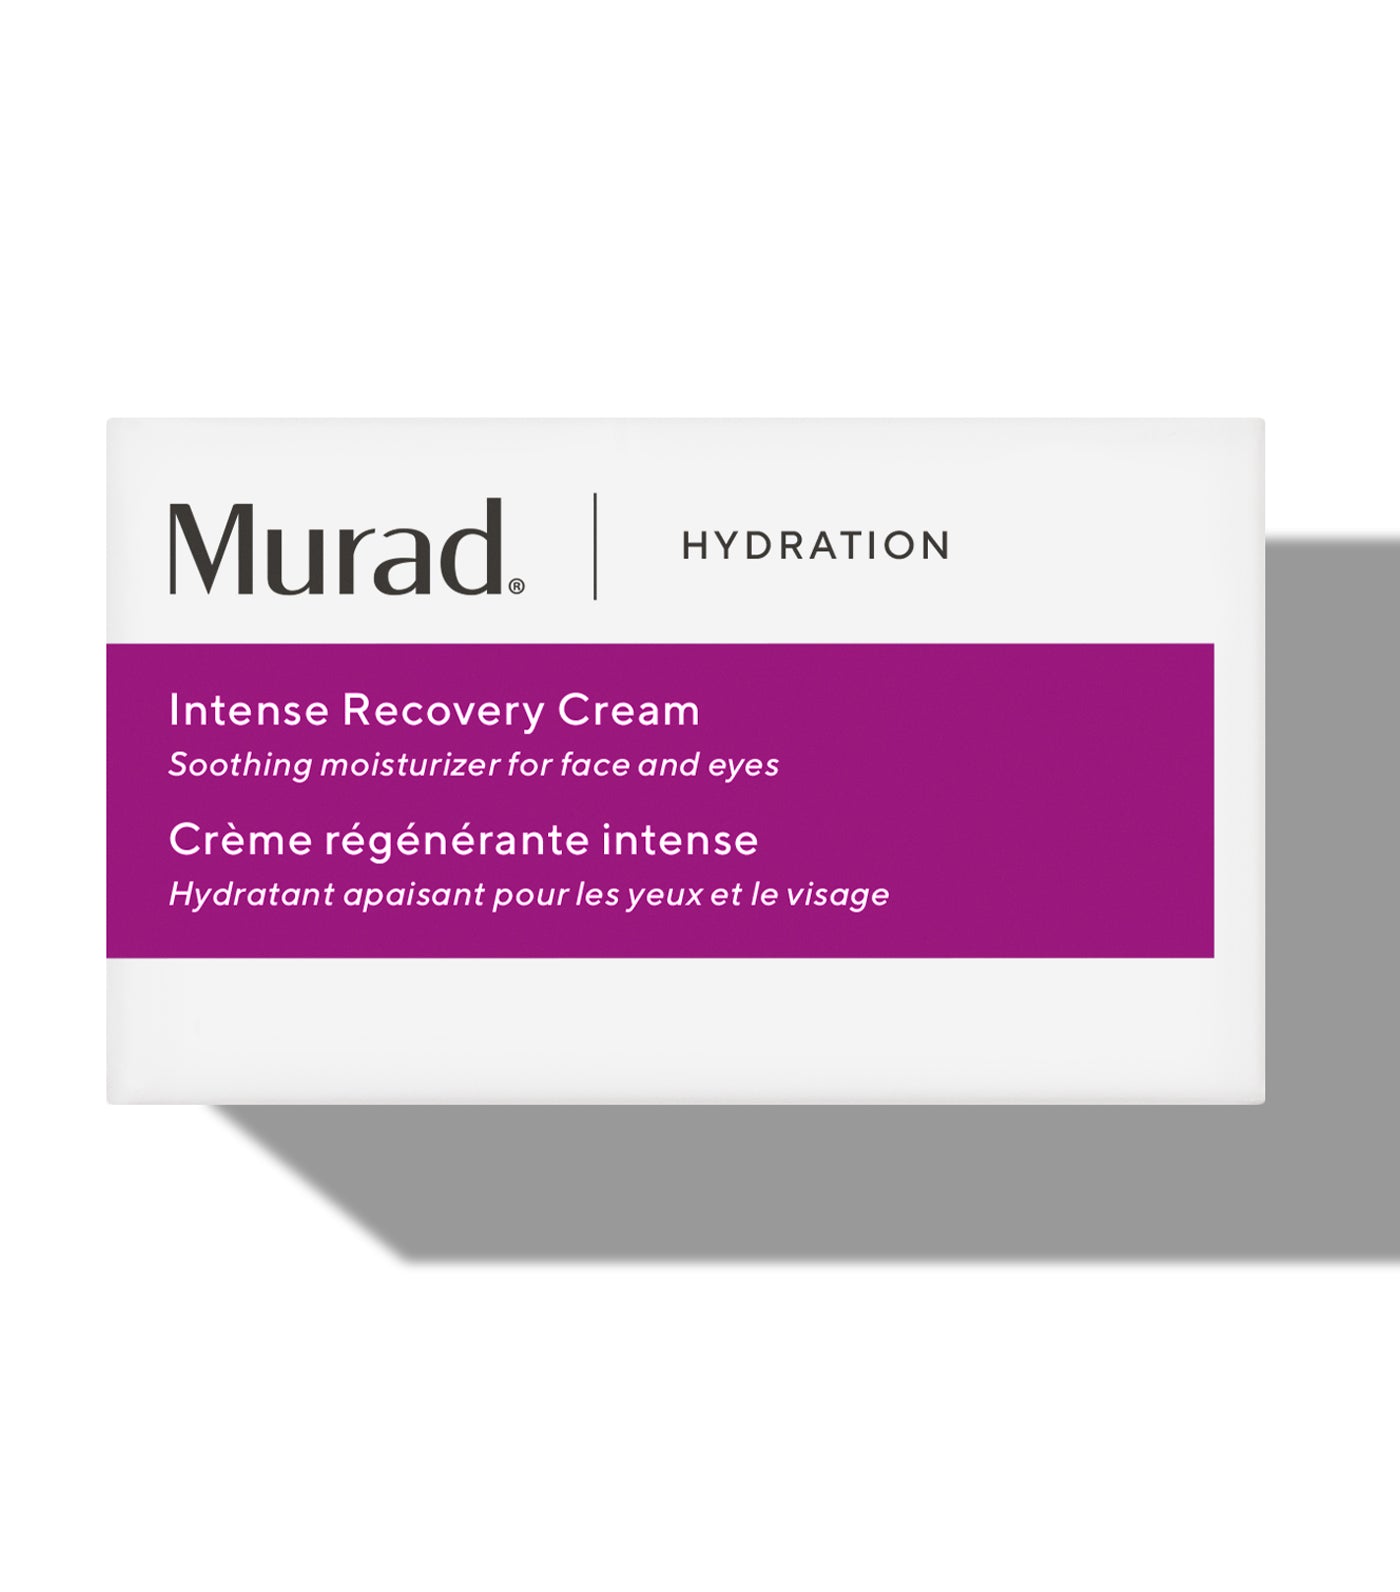 Murad Intense Recovery Cream